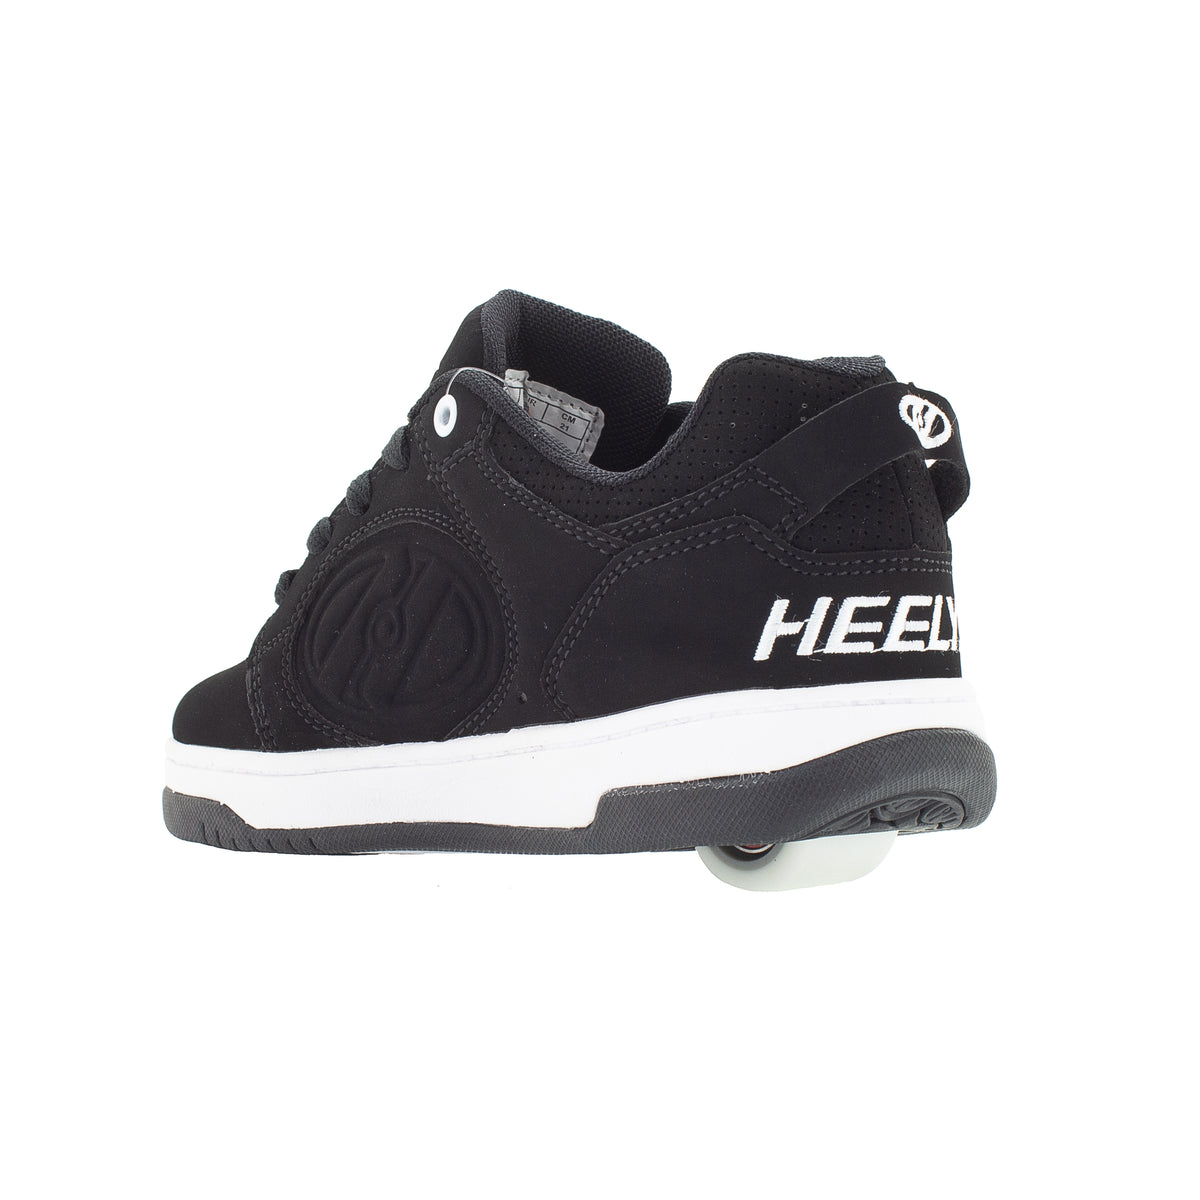 HEELYS Men's Voyager Wheeled Shoe Black/White - HE100713M BLACK/WHITE - BLACK/WHITE, 13